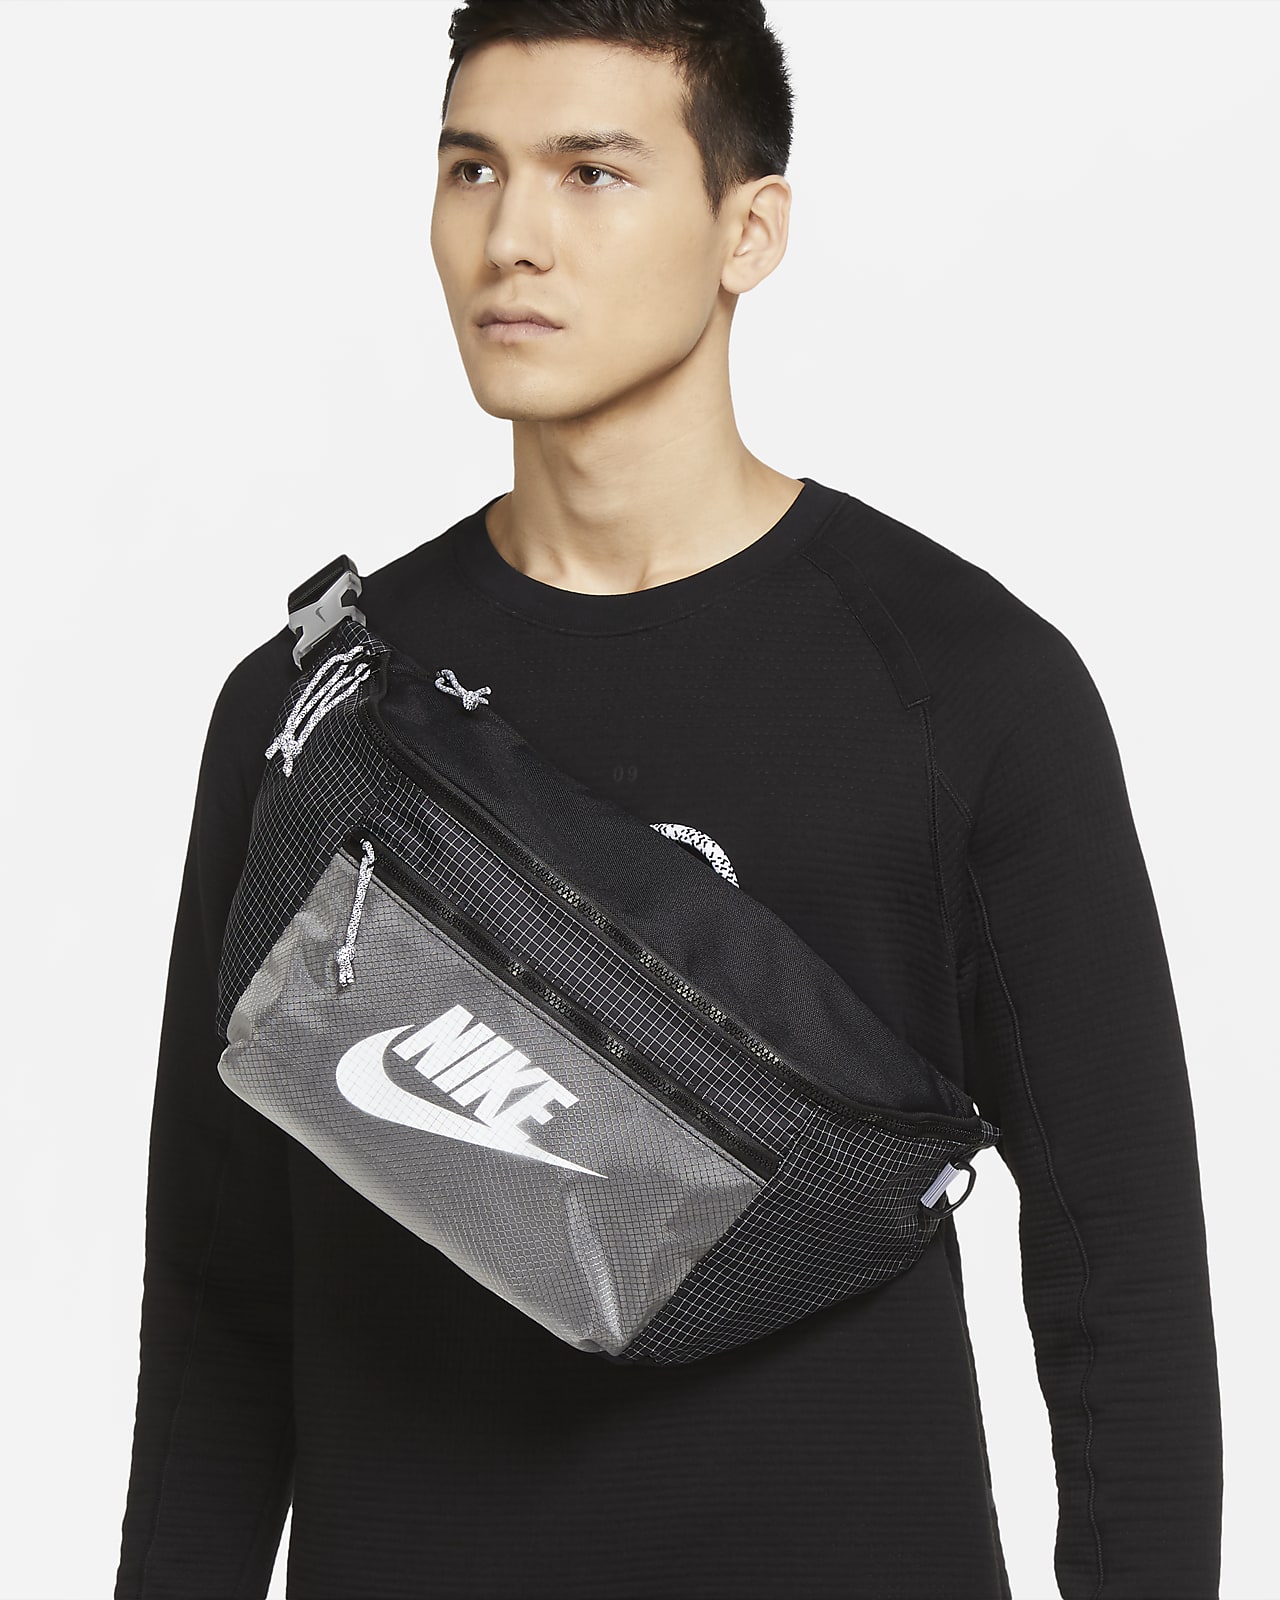 Nike Tech Hip Pack. Nike ID